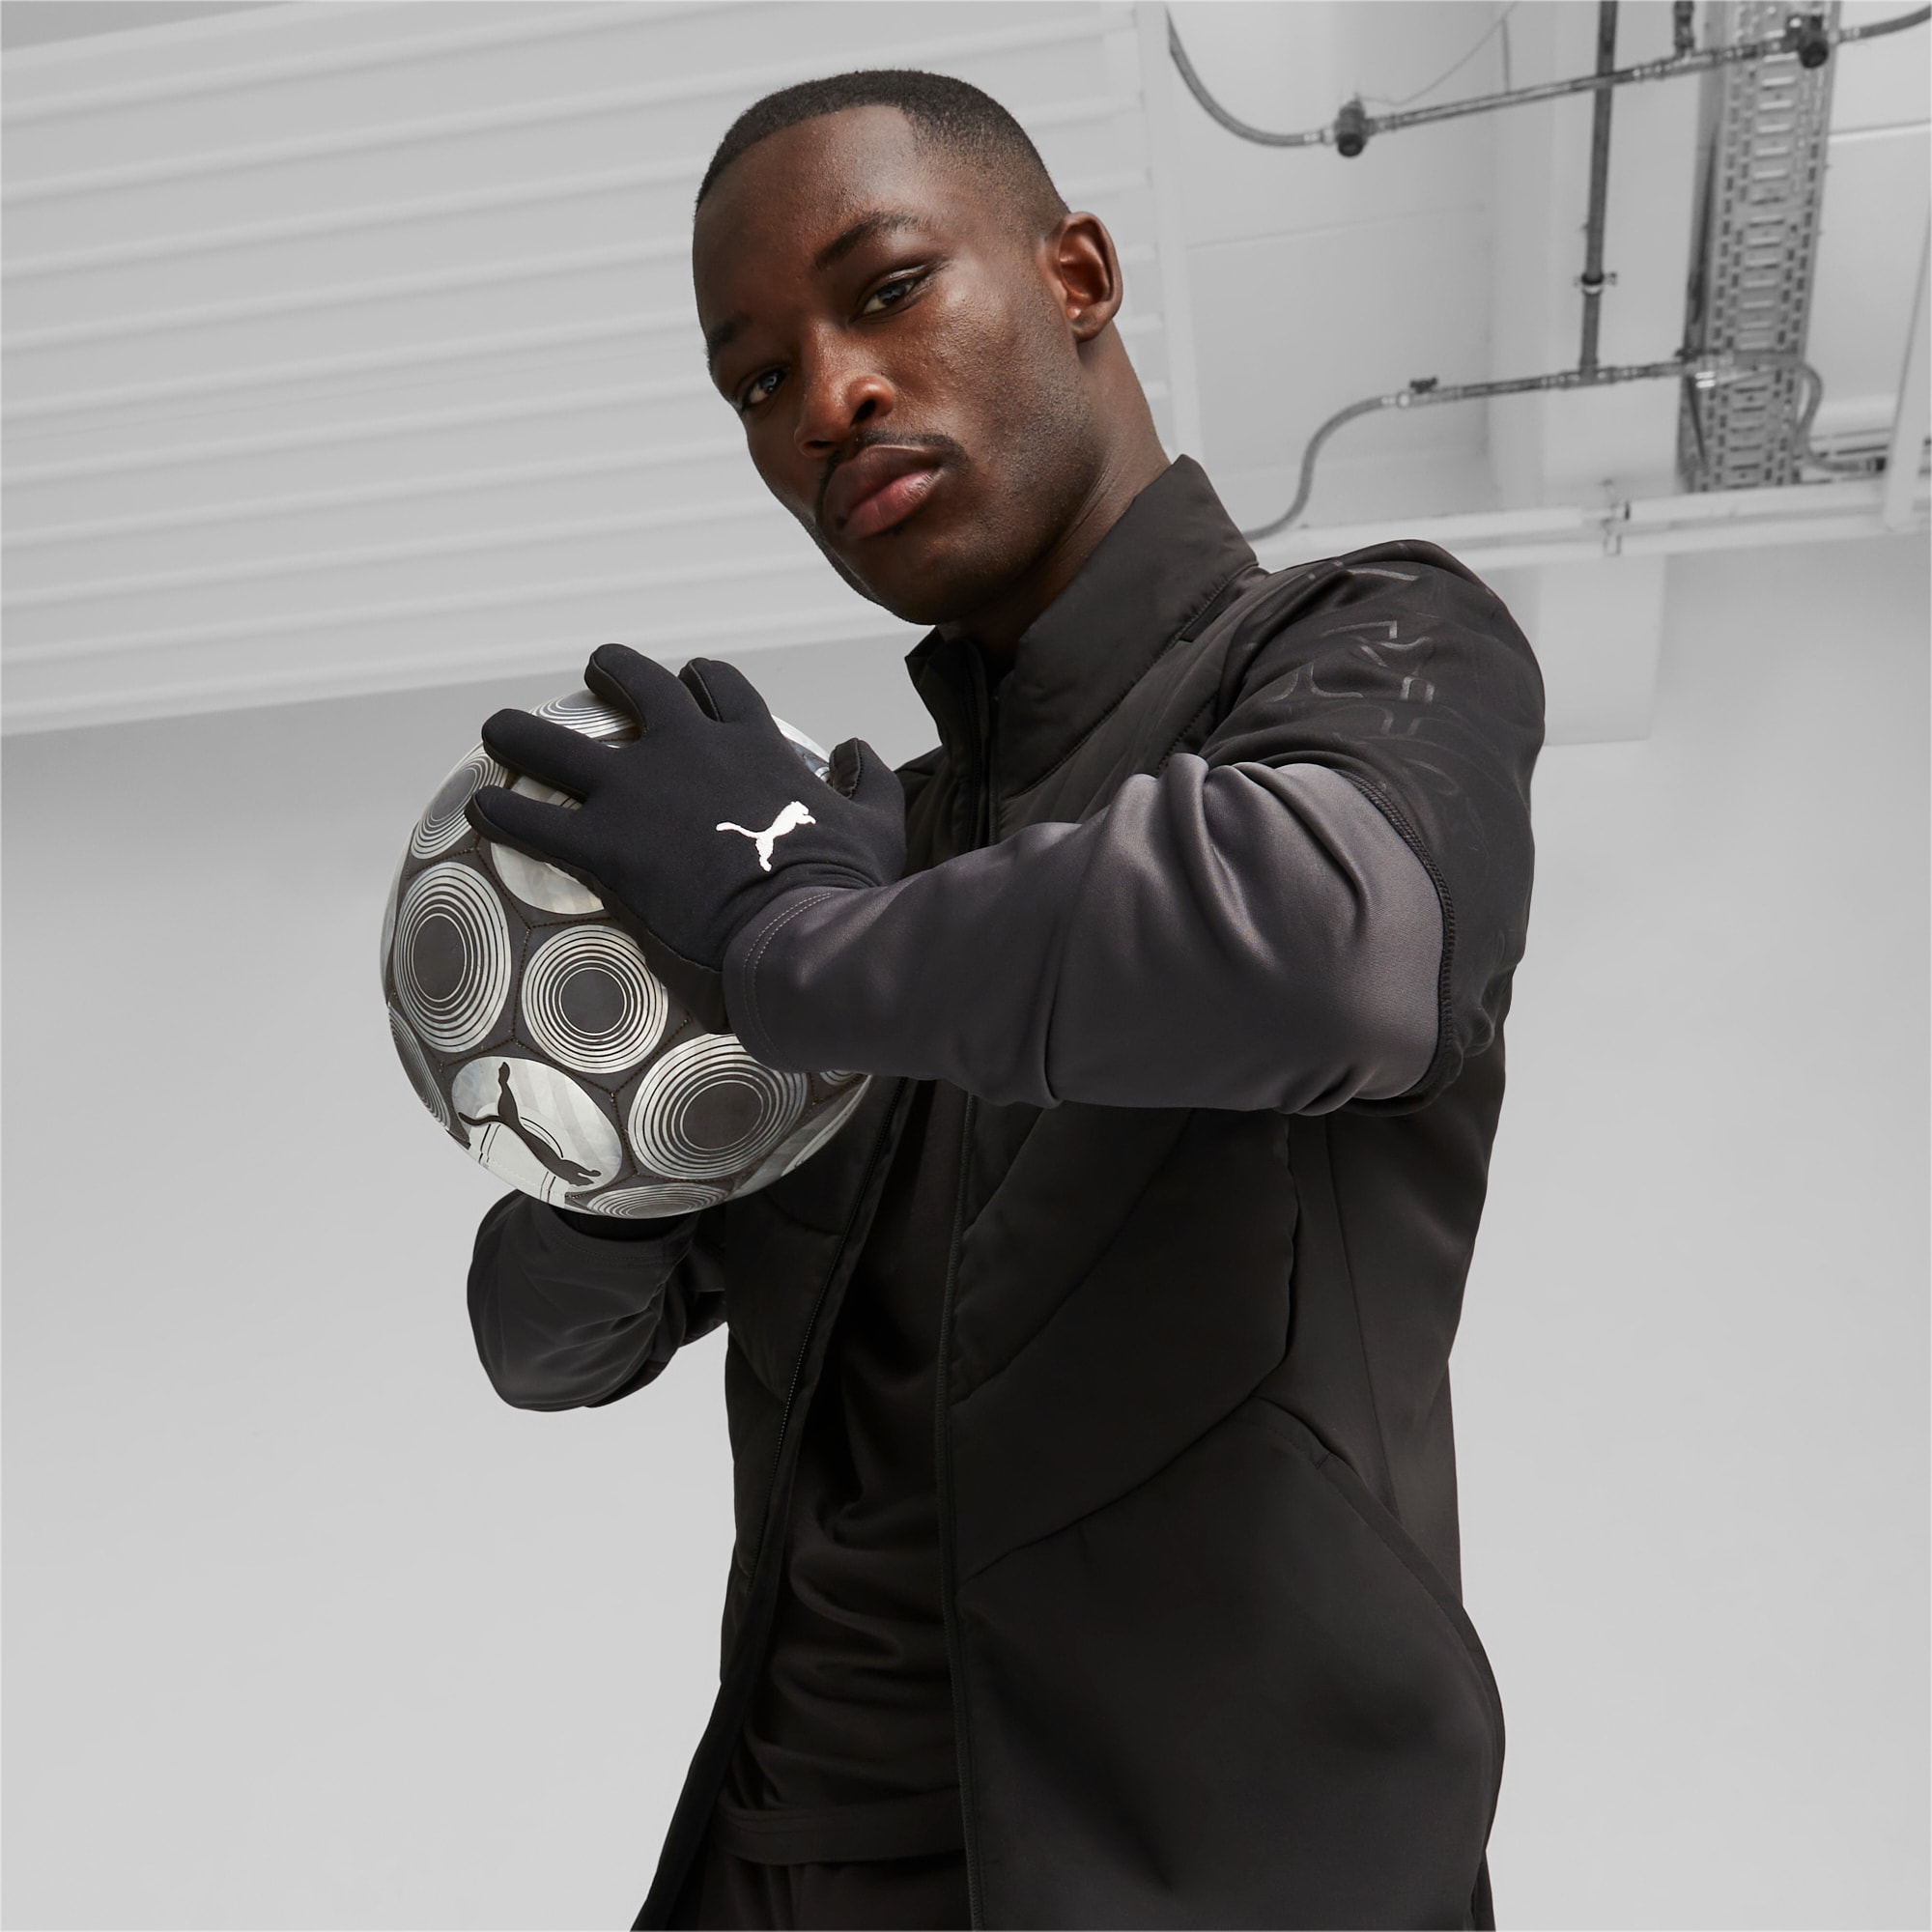 Women's PUMA Individualwinterized Football Gloves, Black/White, Size M, Accessories